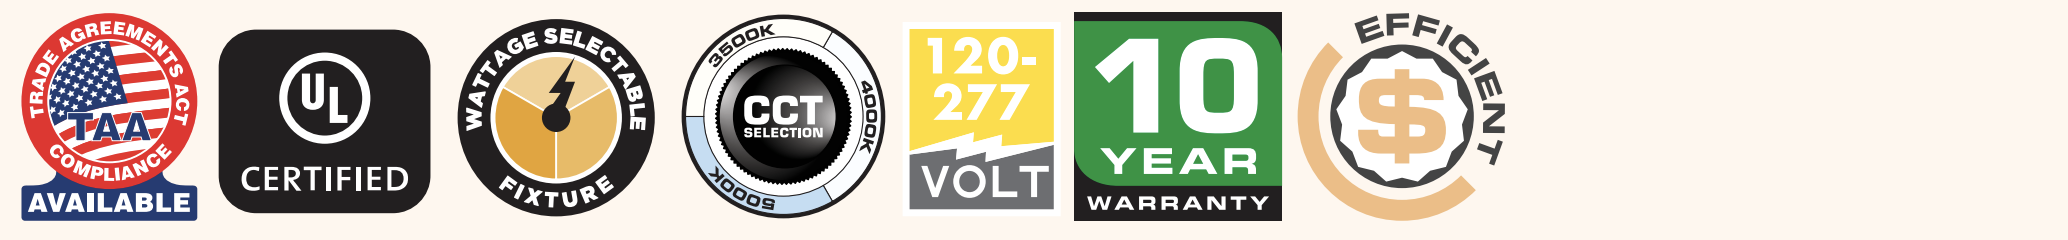 LS2 Series Validation Icons